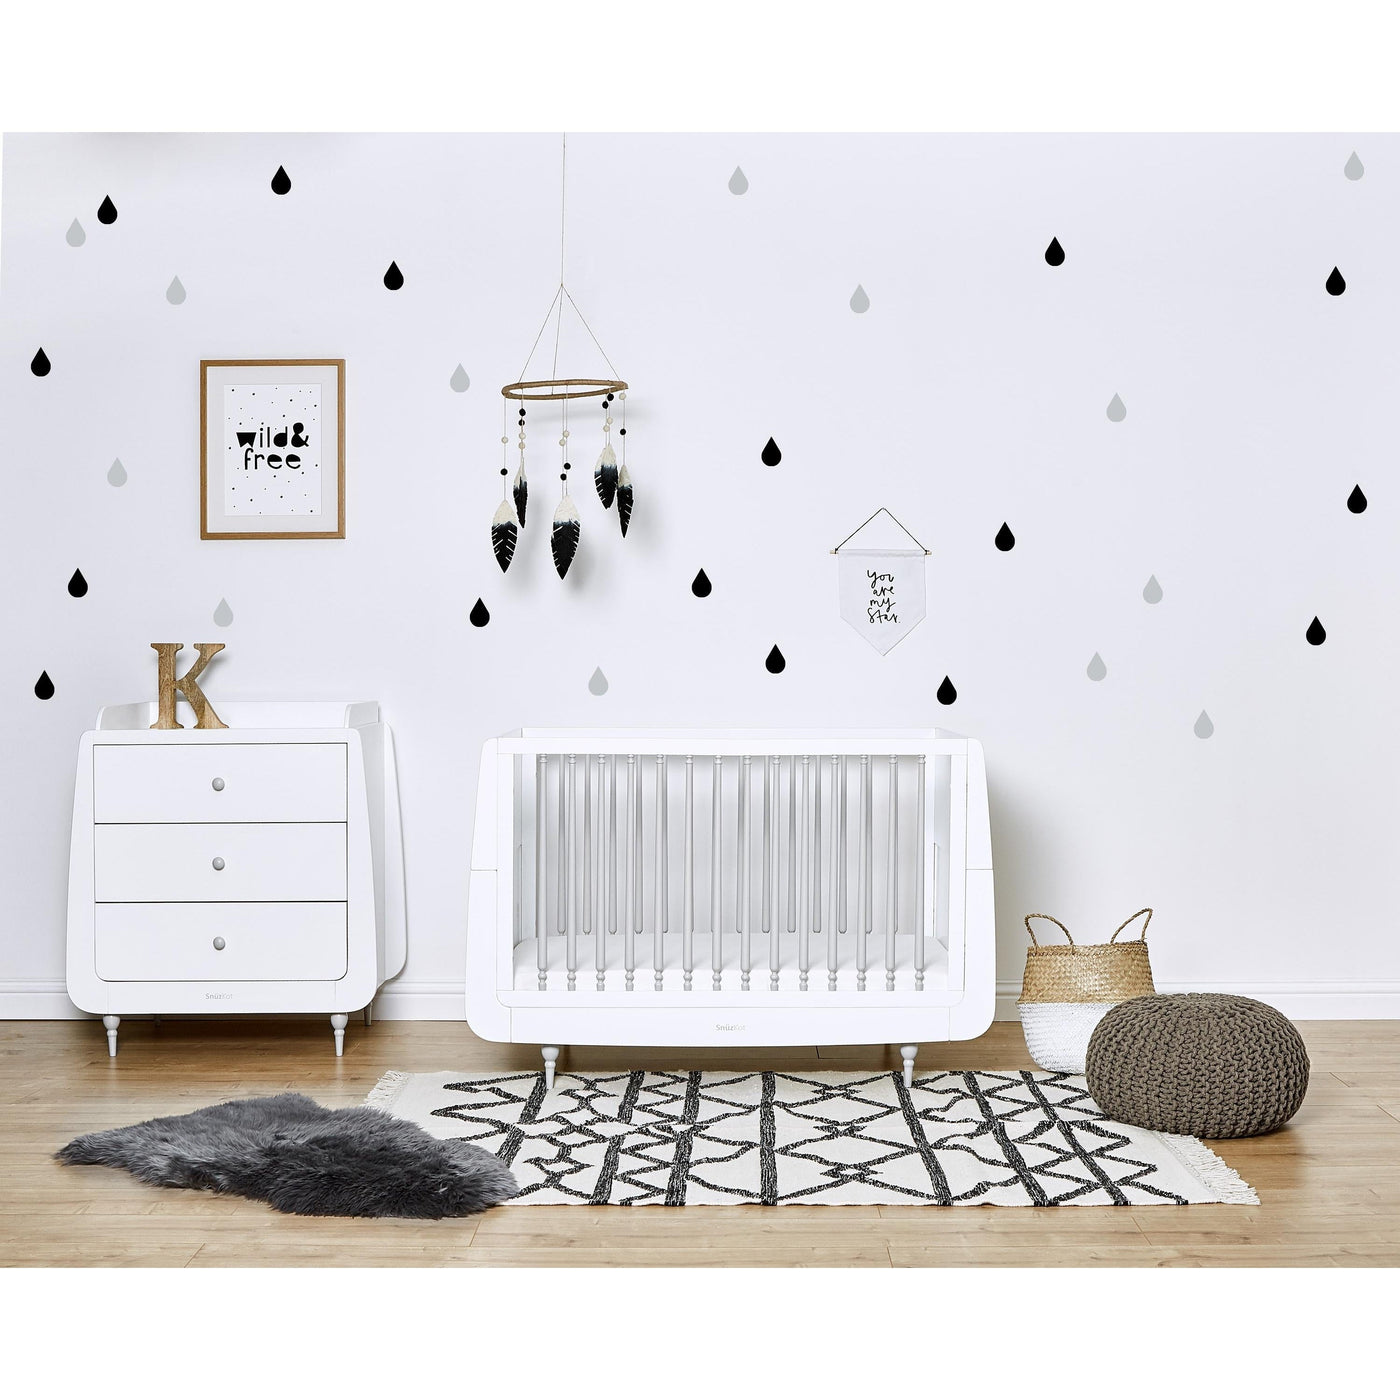 Snuz Nursery Wall Stickers - Black-Grey Raindrops (48pc)